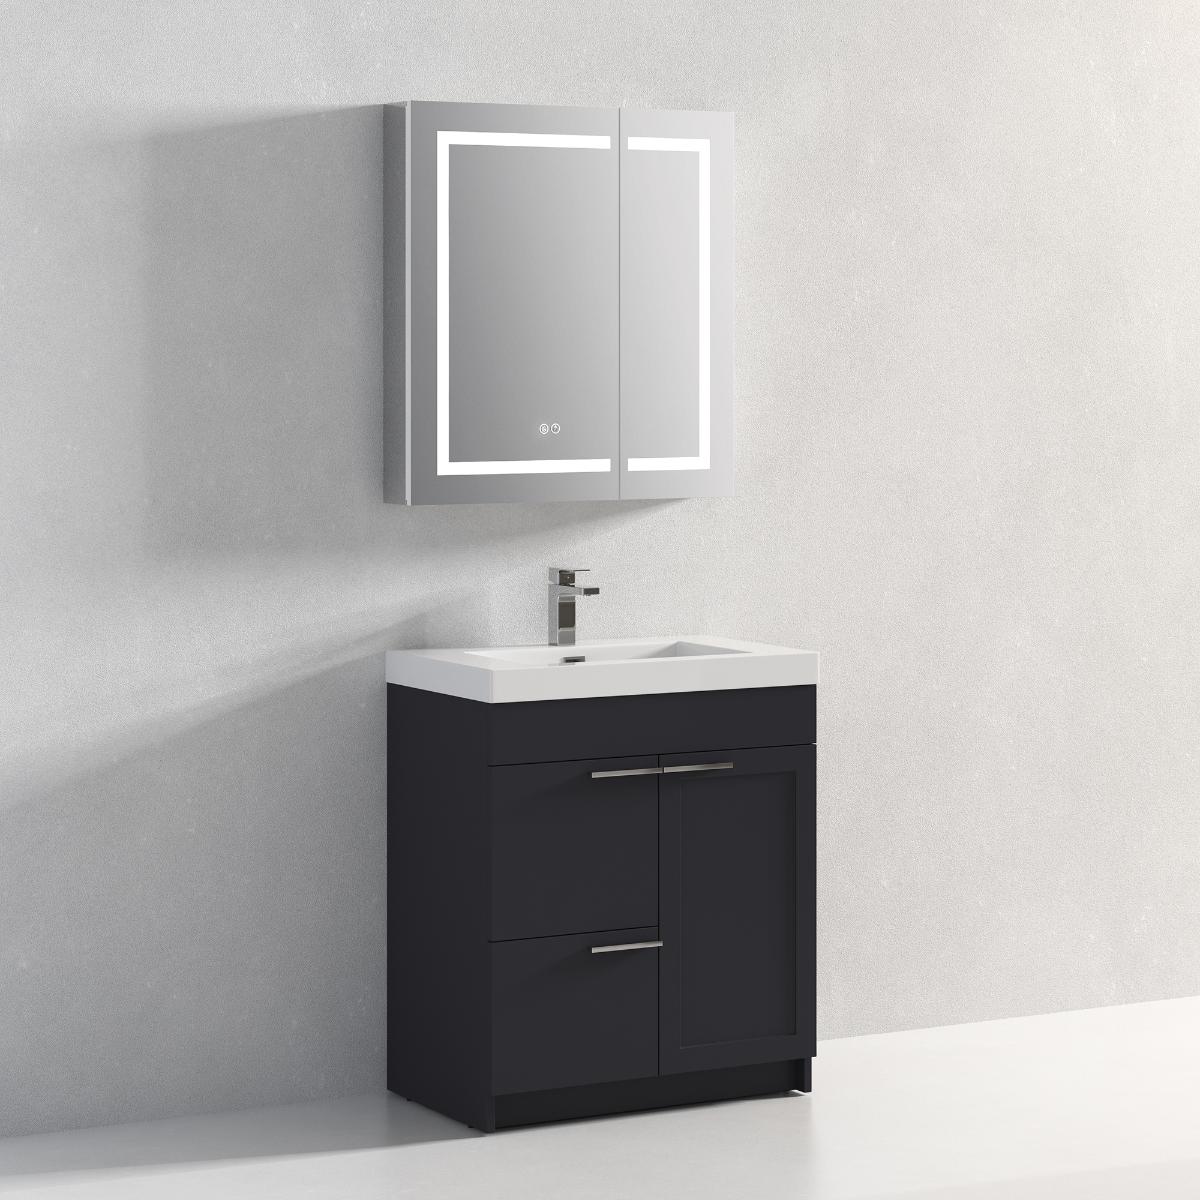 Hanover 30" Bathroom Vanity  #size_30"  #color_charcoal